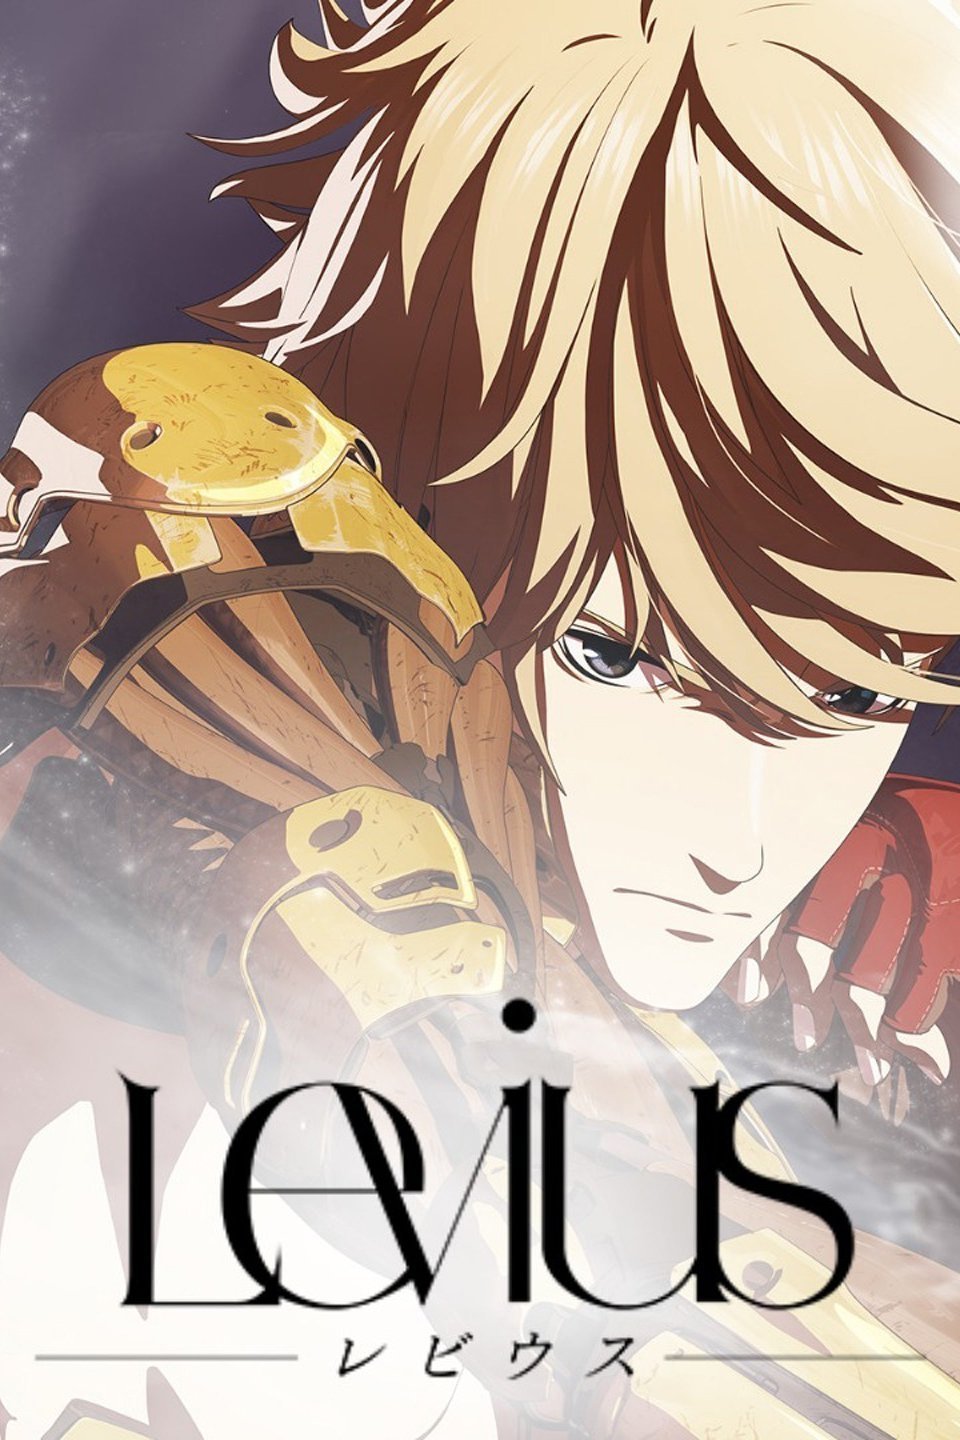 Levius (TV Series 2019) - IMDb